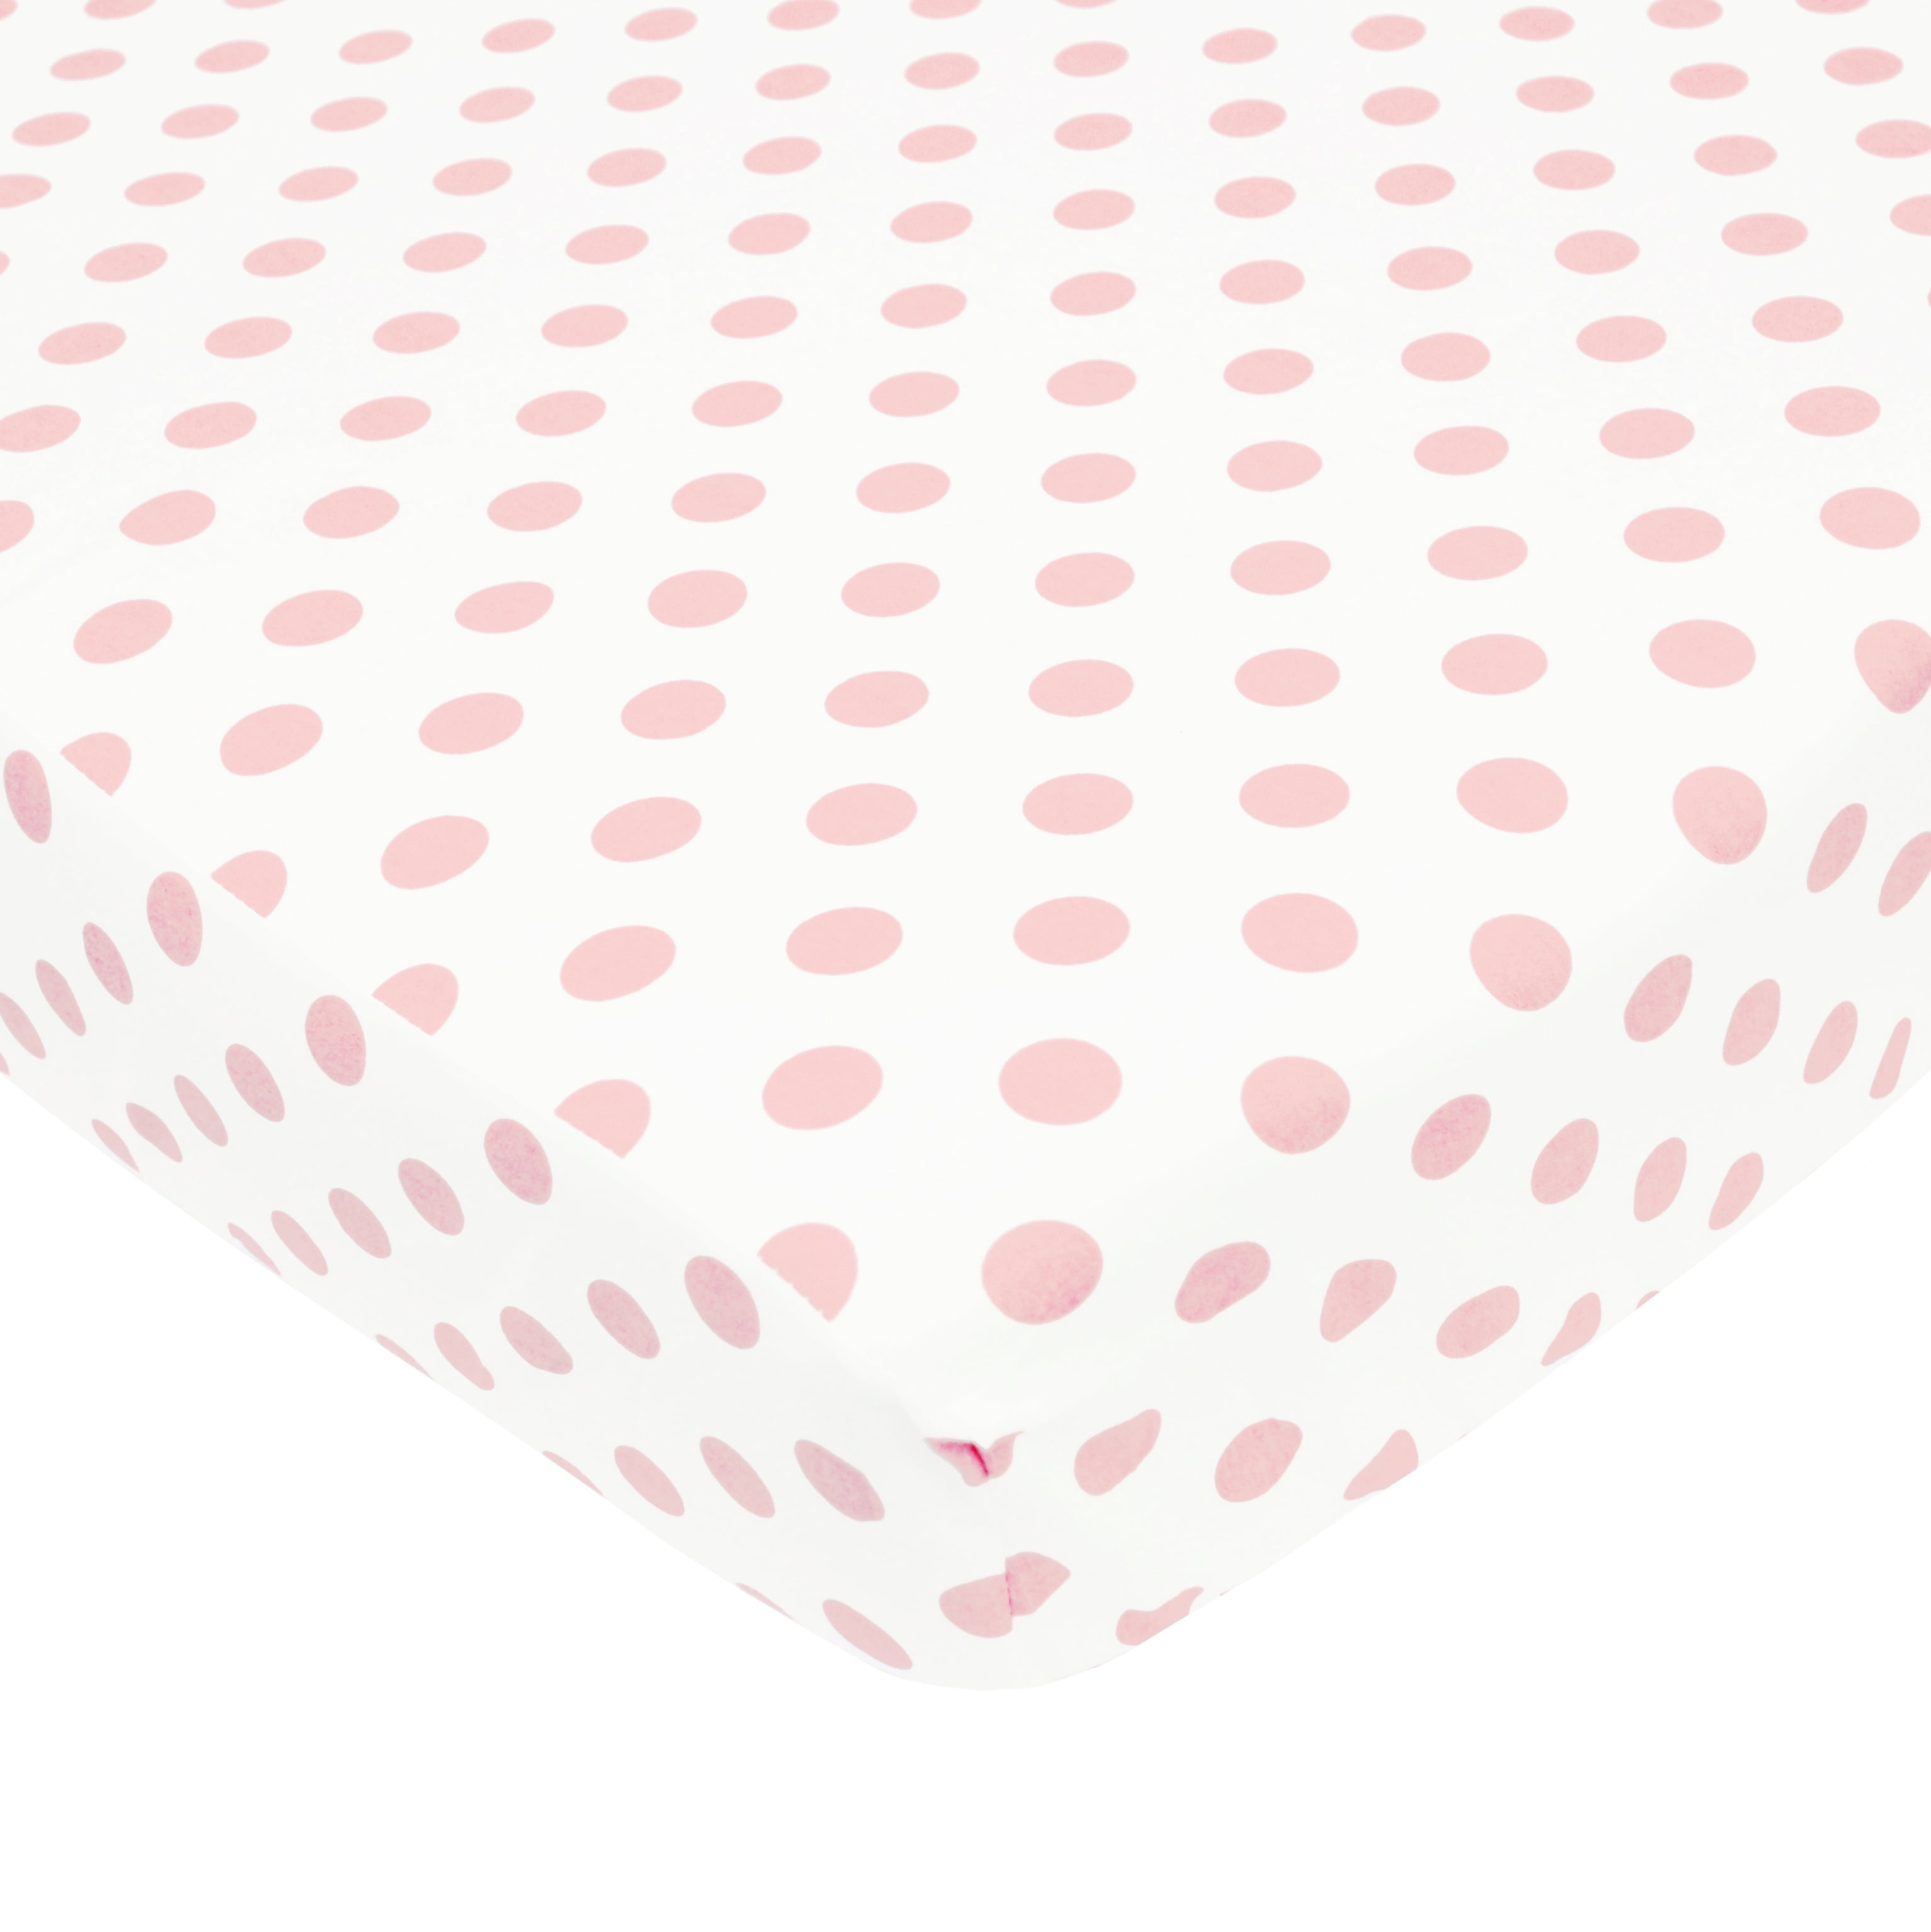 white w dots,circles.pink/yellowgreen/girl Handmade cotton crib sheet 